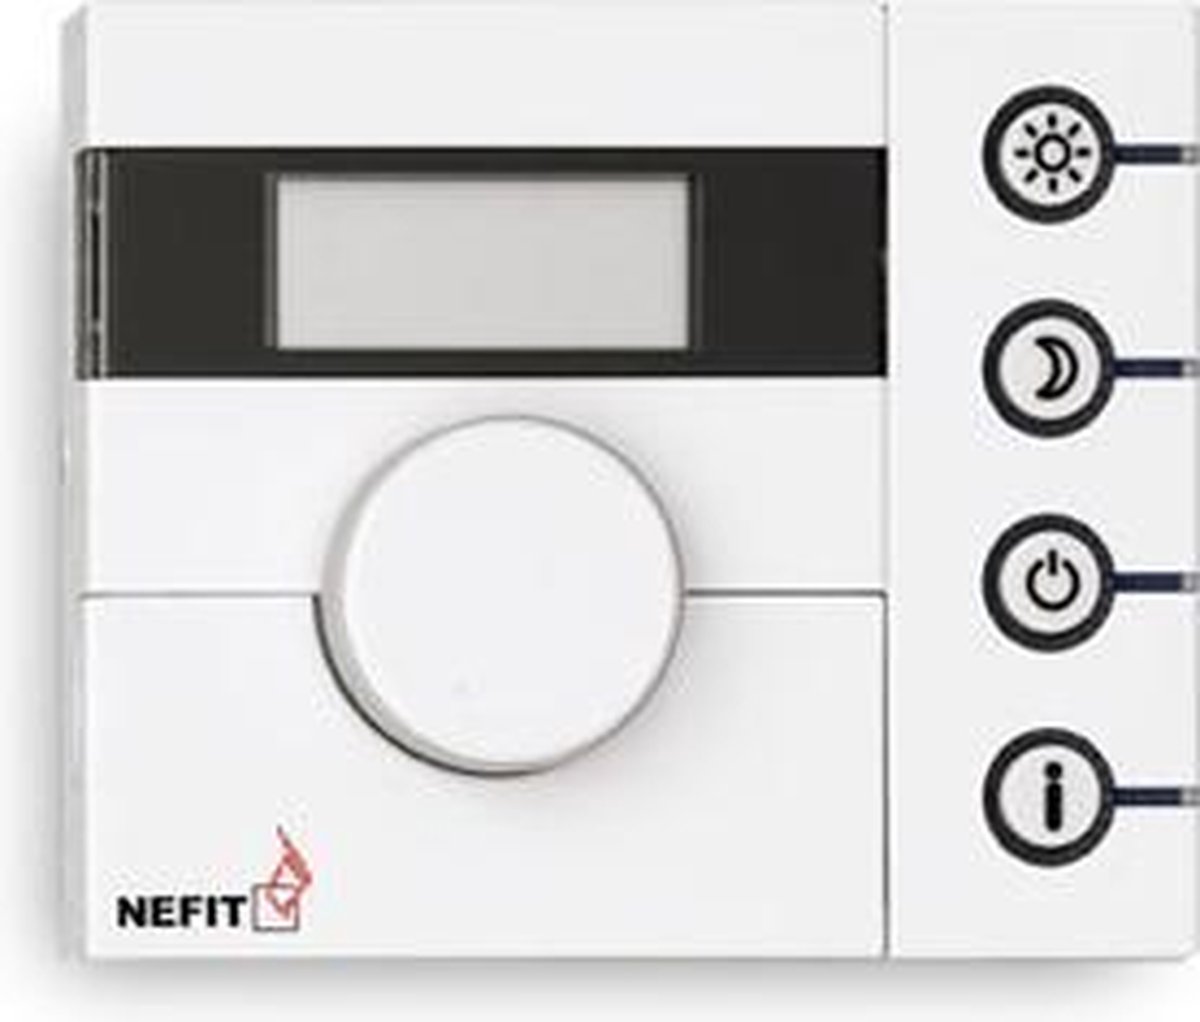 Analist Tact Minister Nefit ModuLine 200 Kamerthermostaat - Instelbare nachtverlaging | DGM Outlet